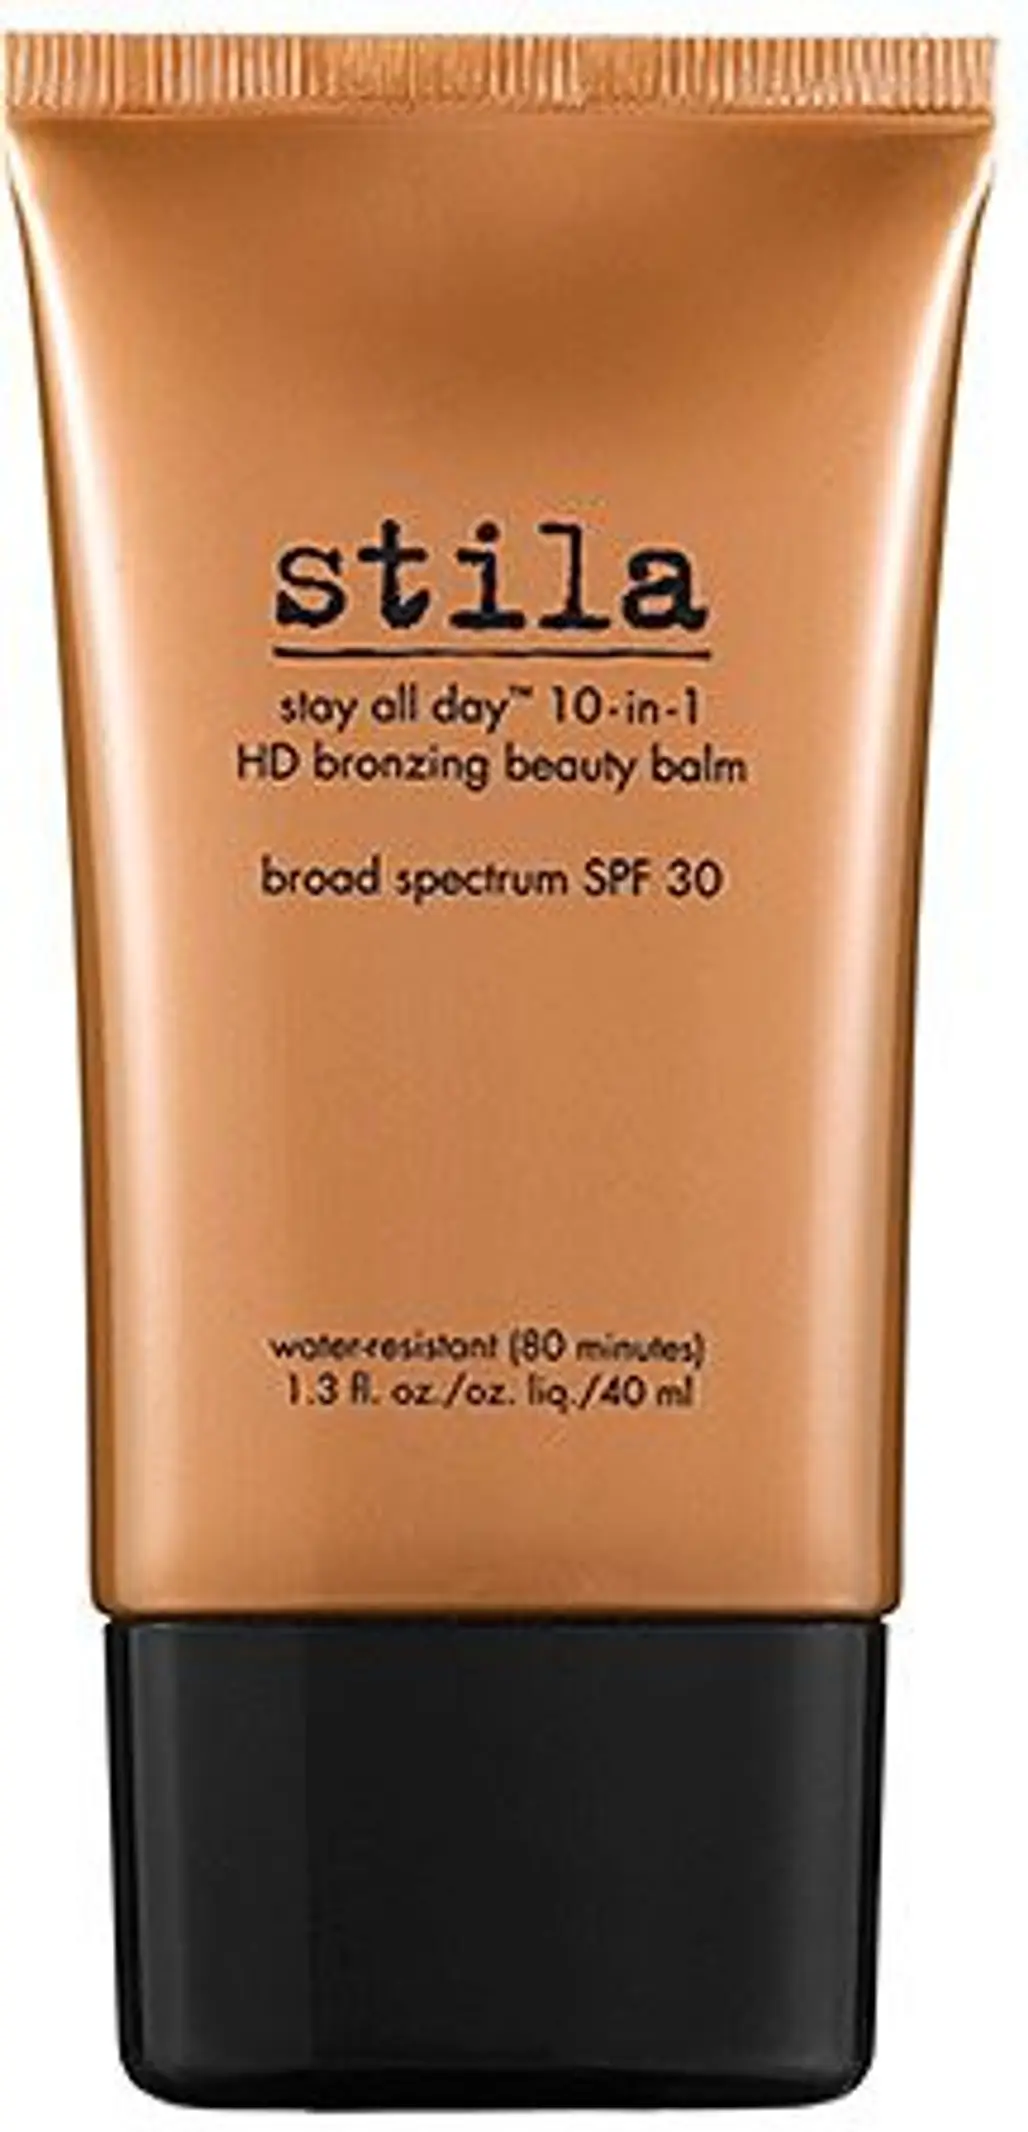 Stila Stay All Day 10-in-1 HD Bronzing Beauty Balm